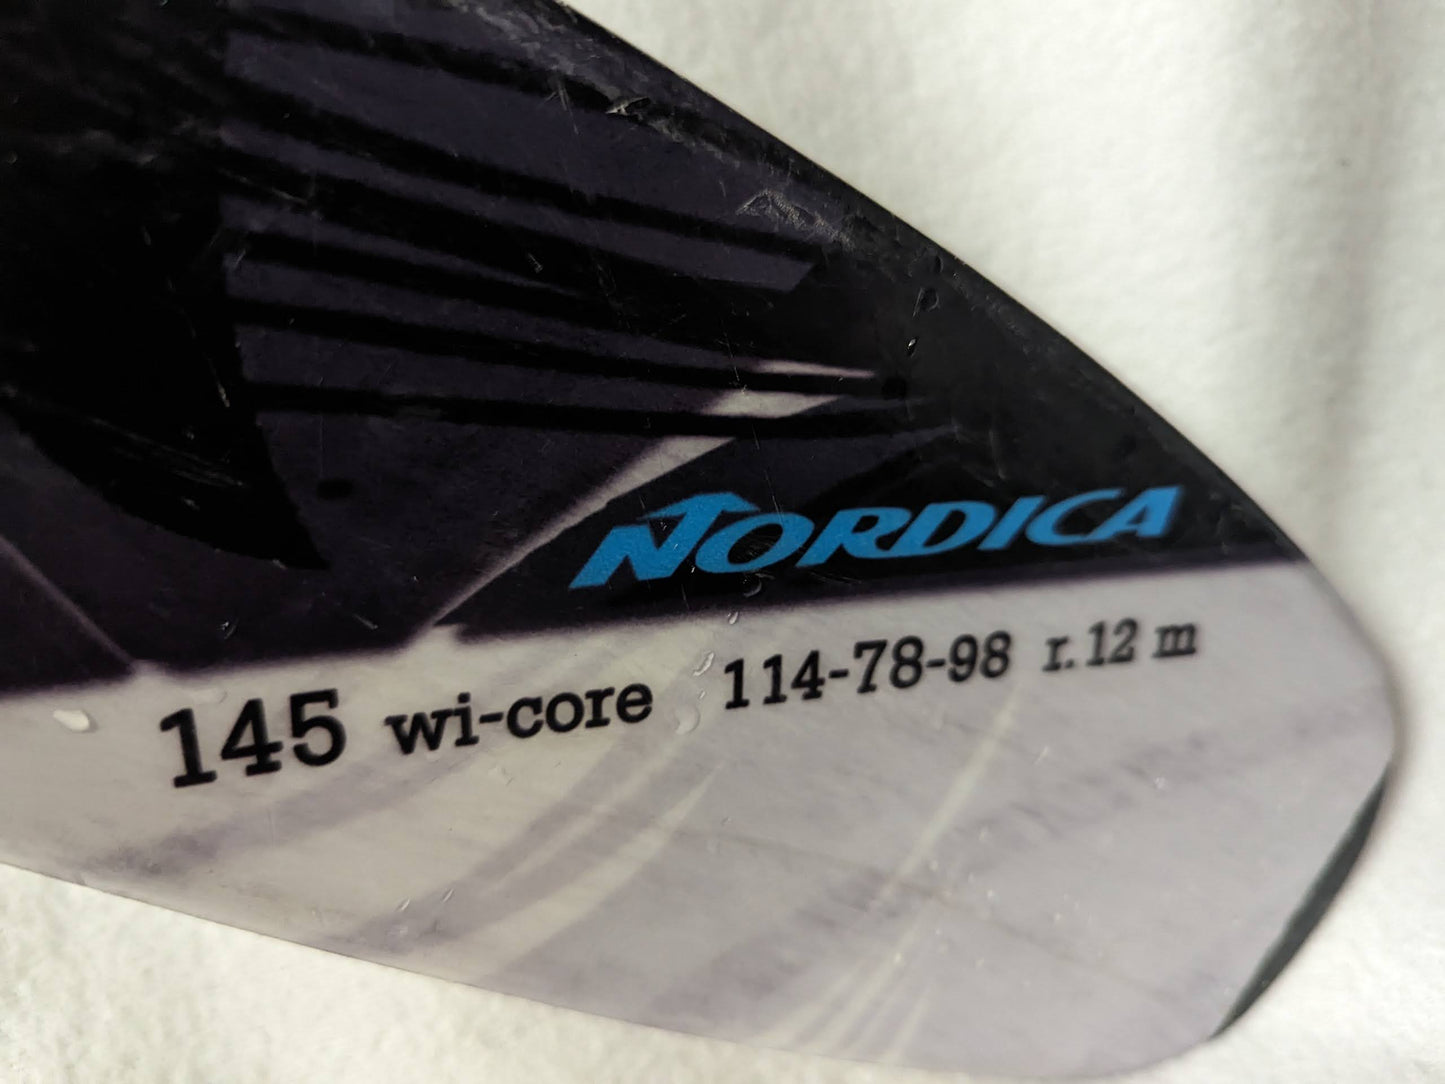 Nordica Belle  Skis Size 145 Cm Color Multicolor Condition Used